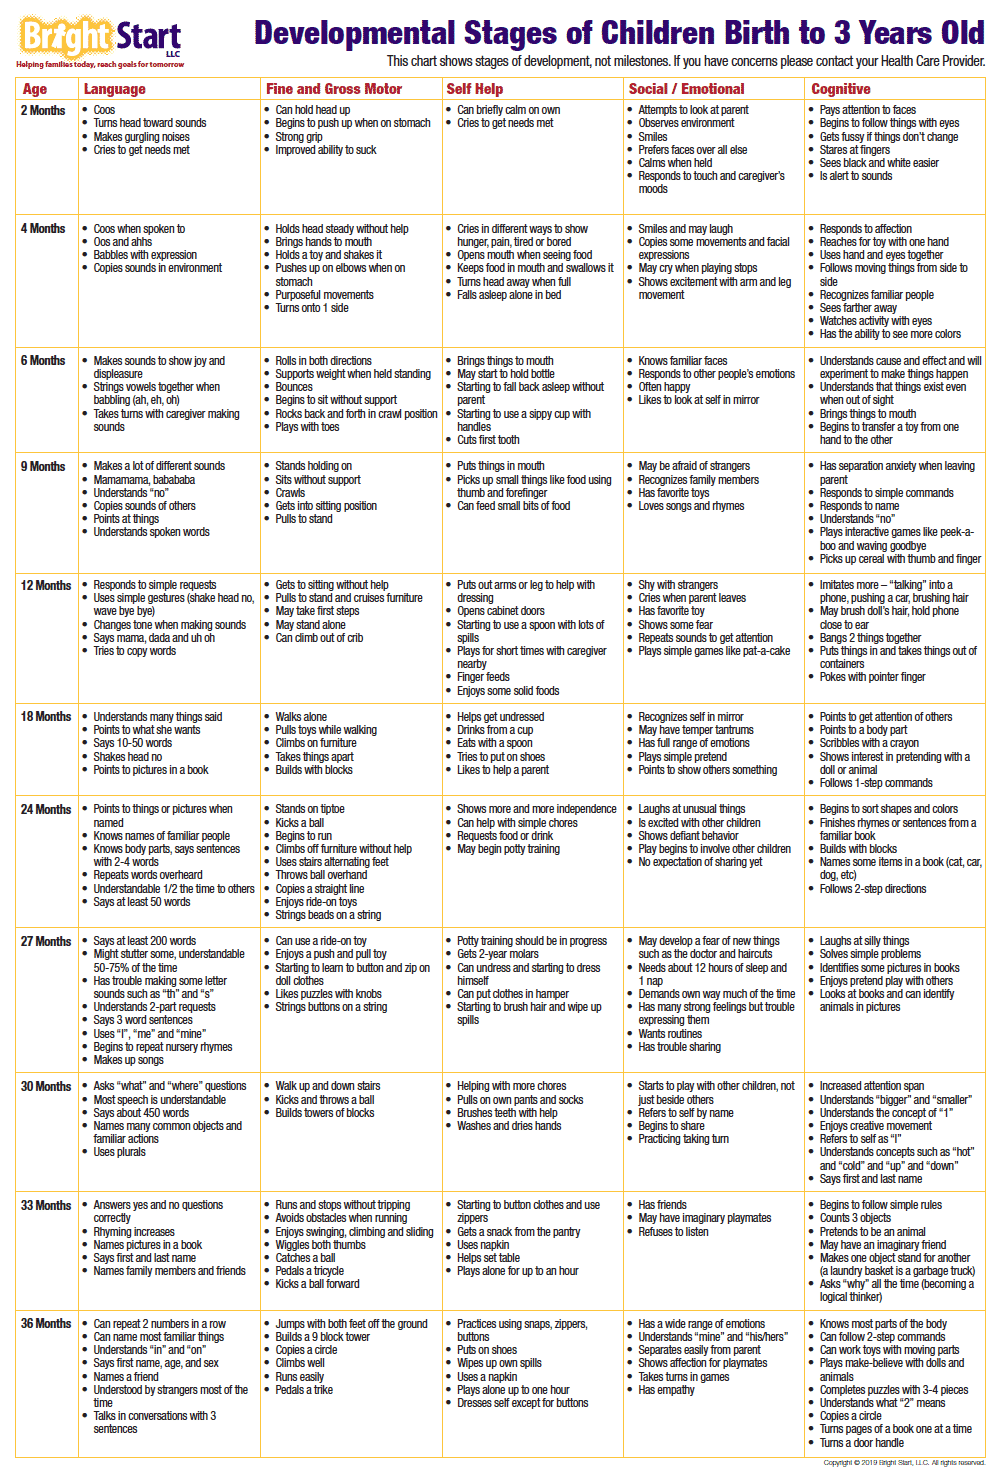 child cognitive development stages chart